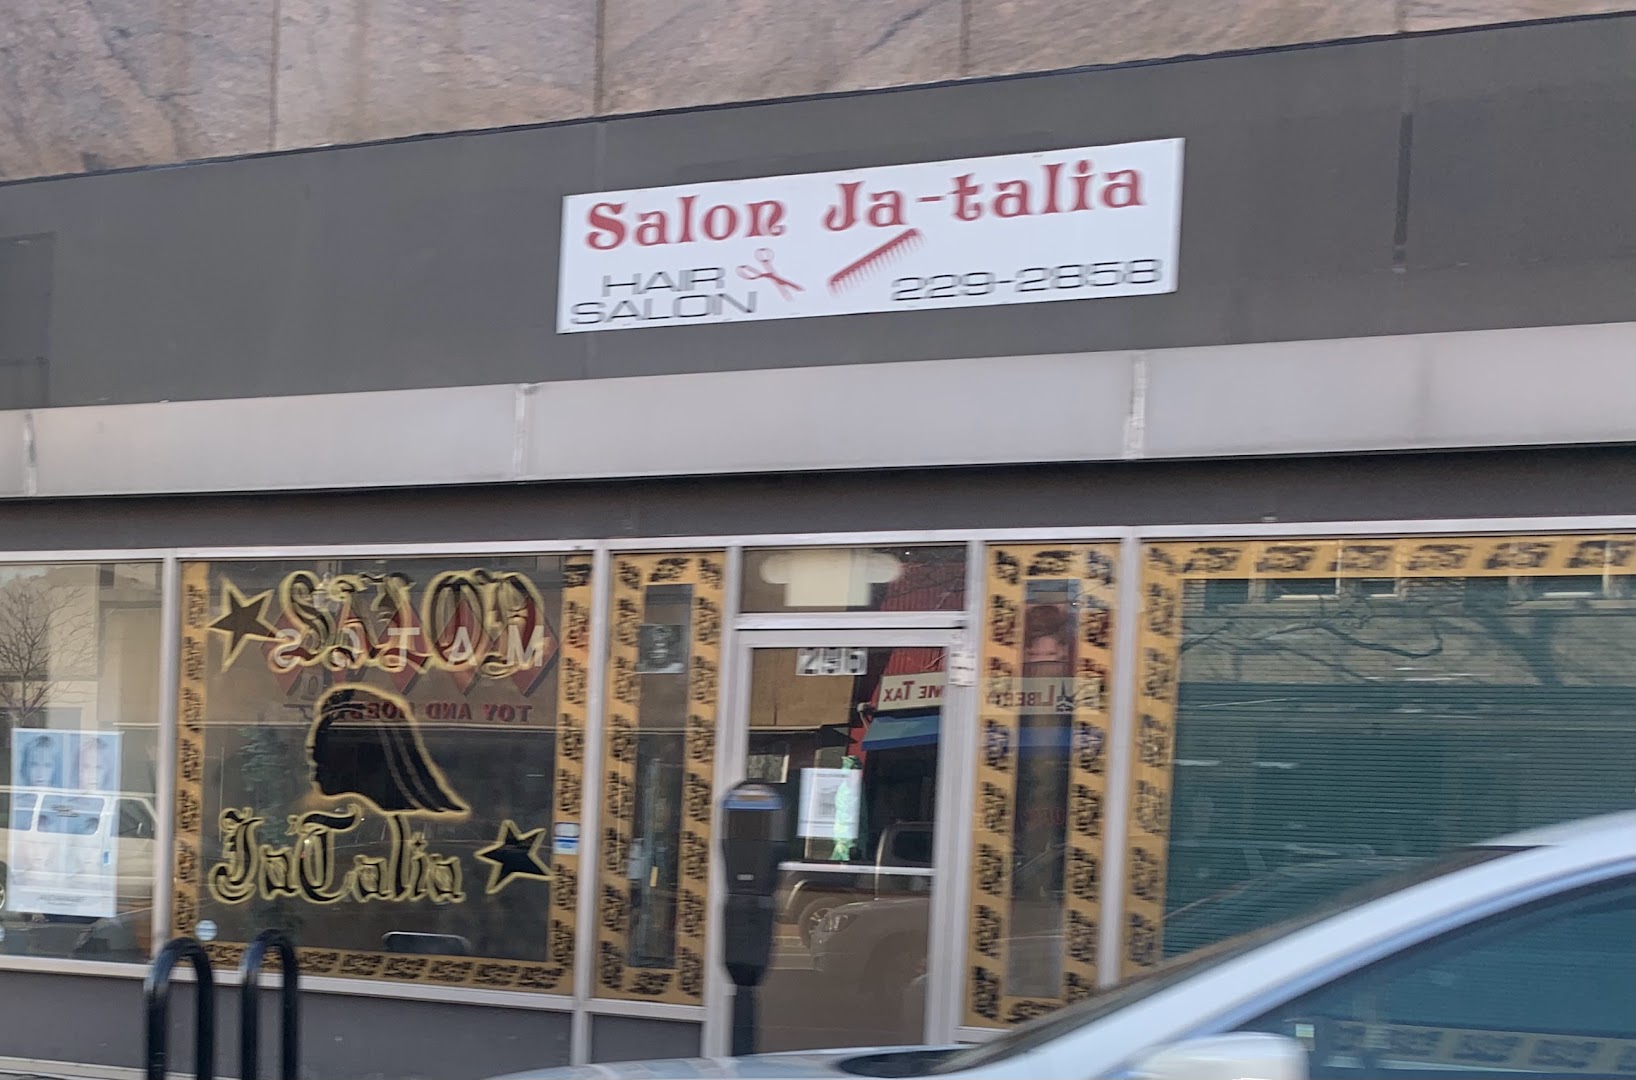 Salon Ja-talia